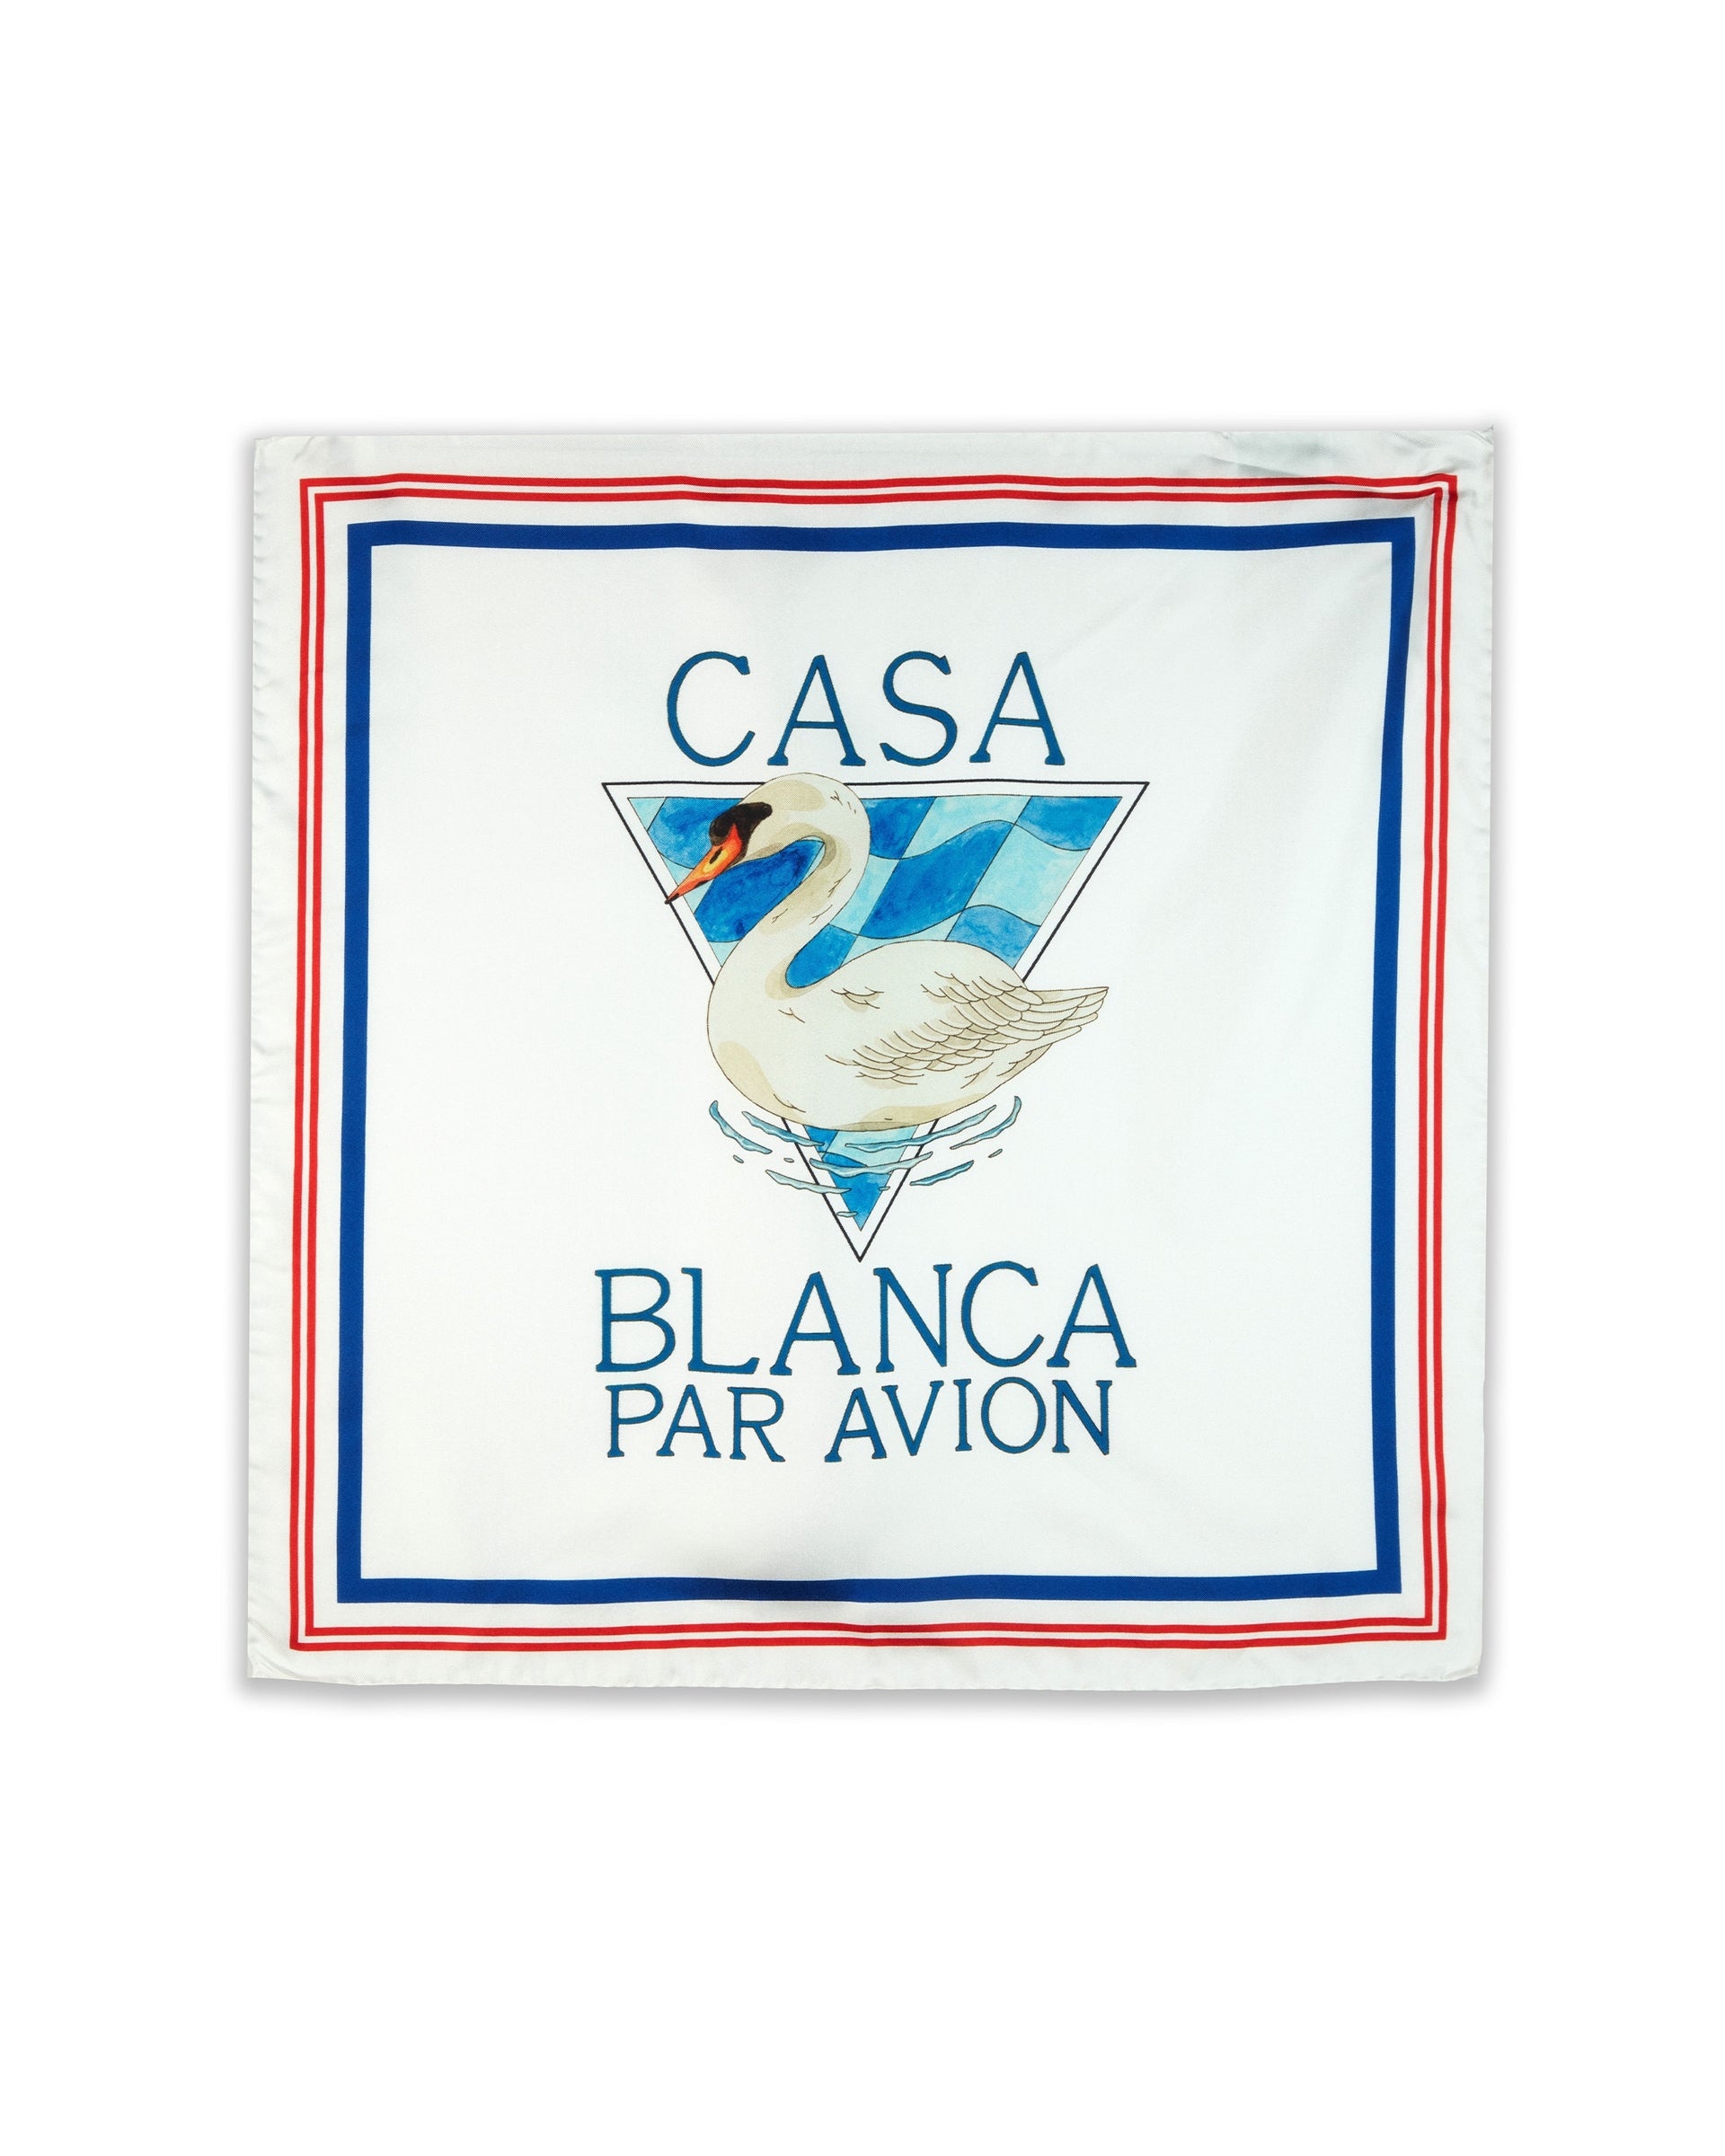 Casablanca Par Avion Silk Scarf - 1